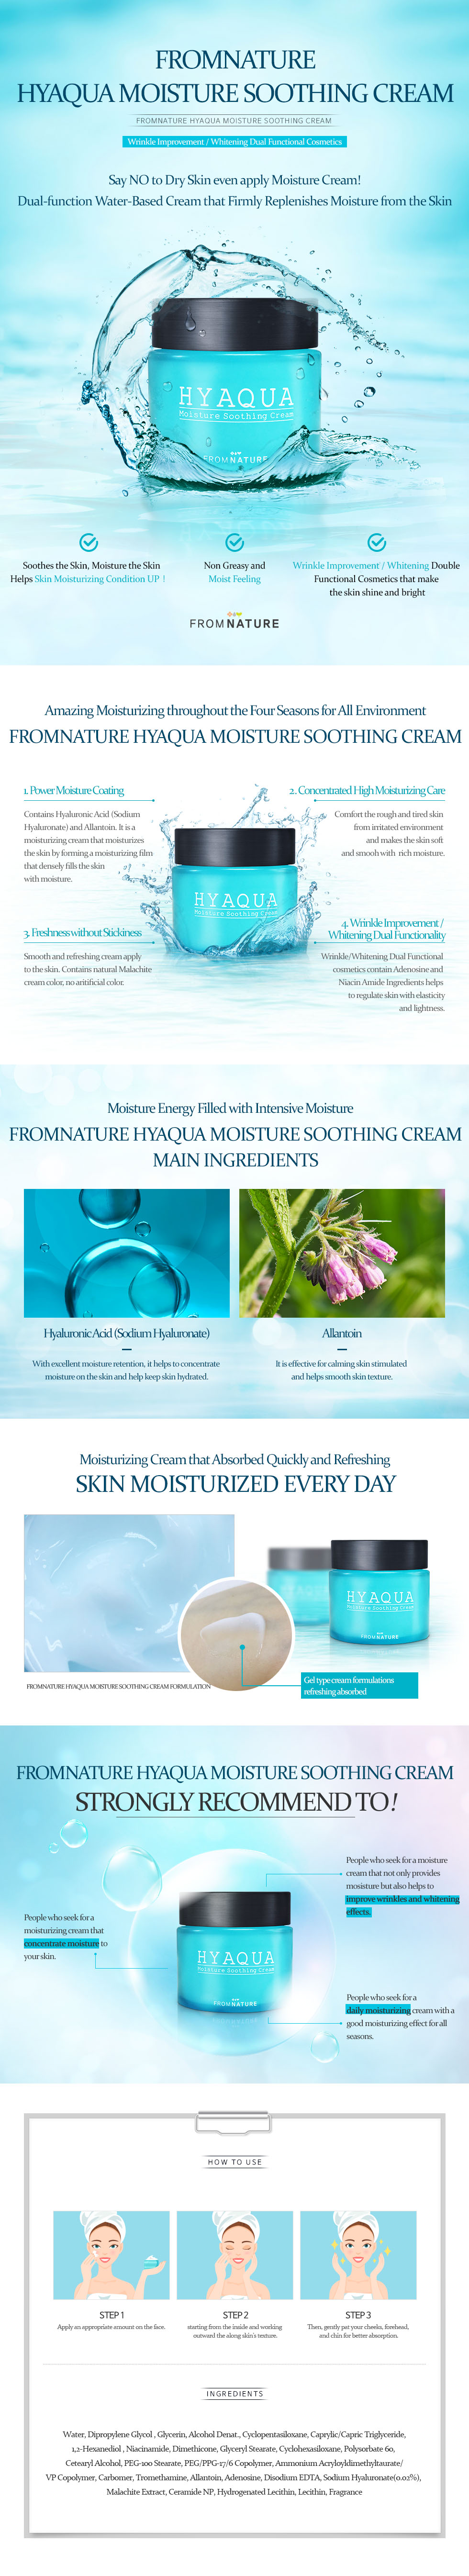 Hyaqua Moisture Soothing Cream